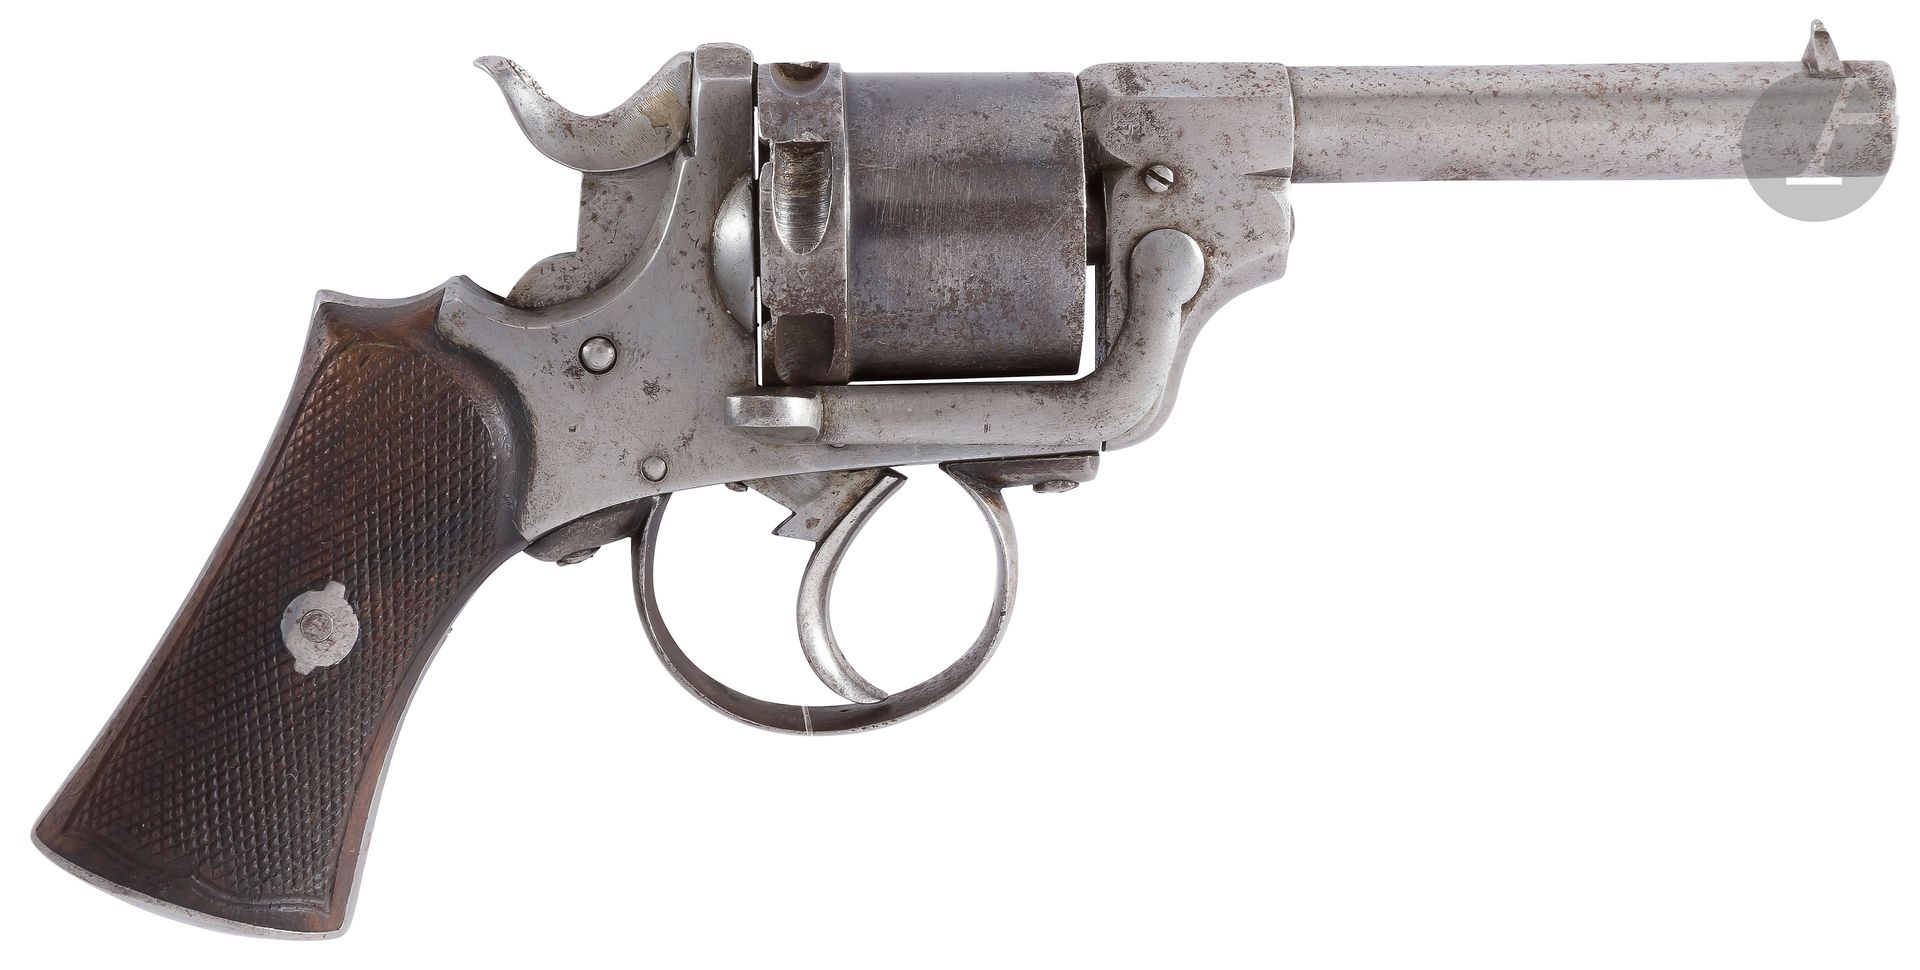 Null Revolver System Galand, sechs Schuss, Kaliber 32 ringförmig.
Runder, gezoge&hellip;